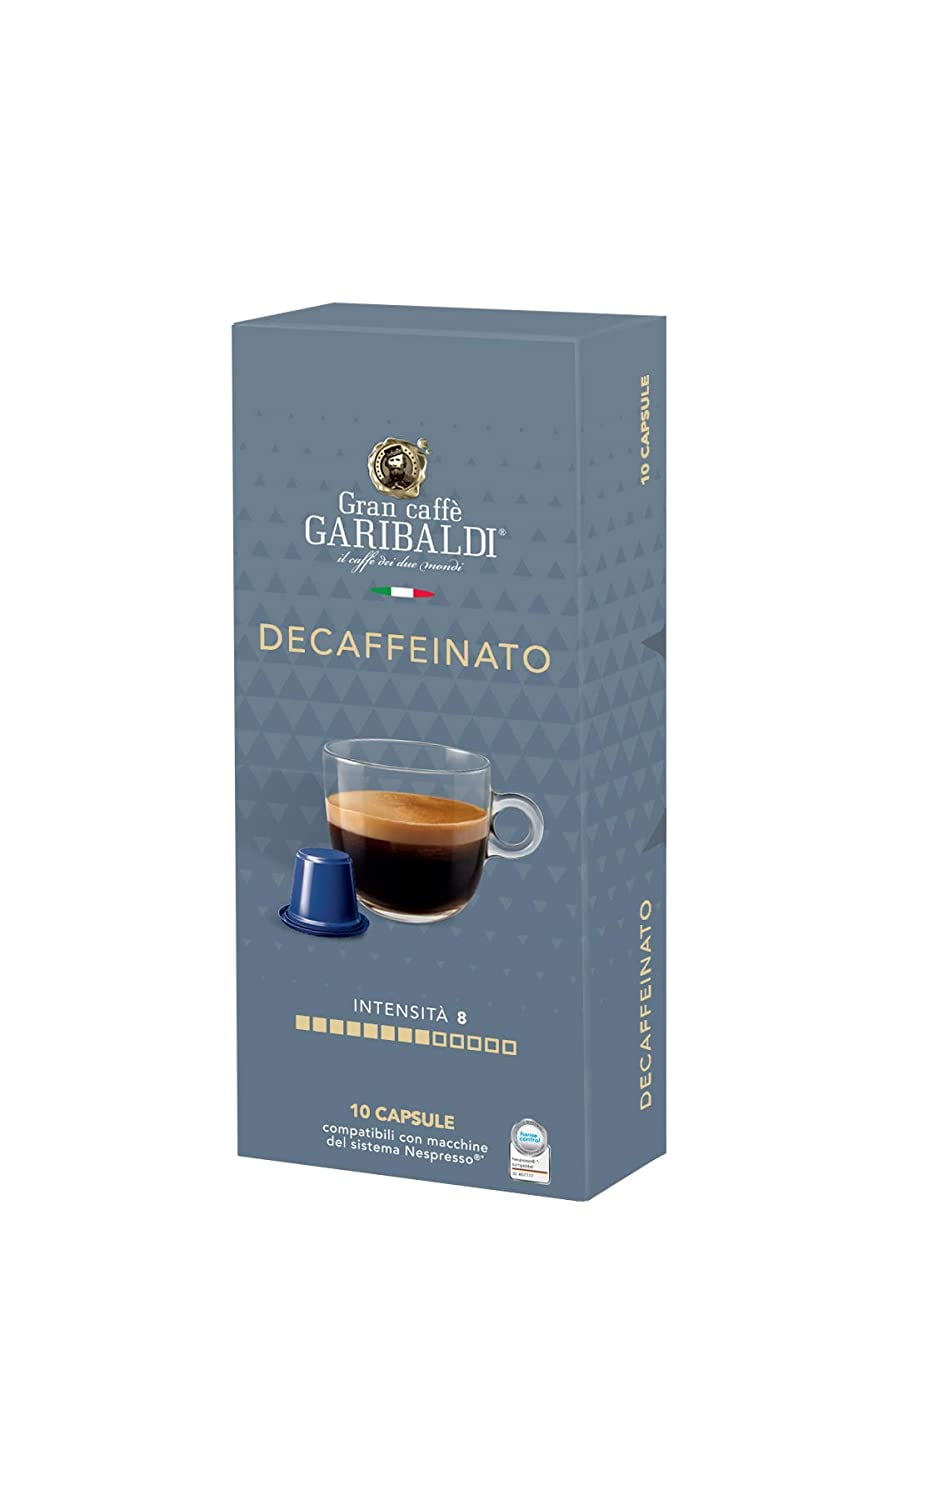 Gran Caffè Garibaldi Nespresso* capsules (Decaf, 60 Count) - Walmart.com